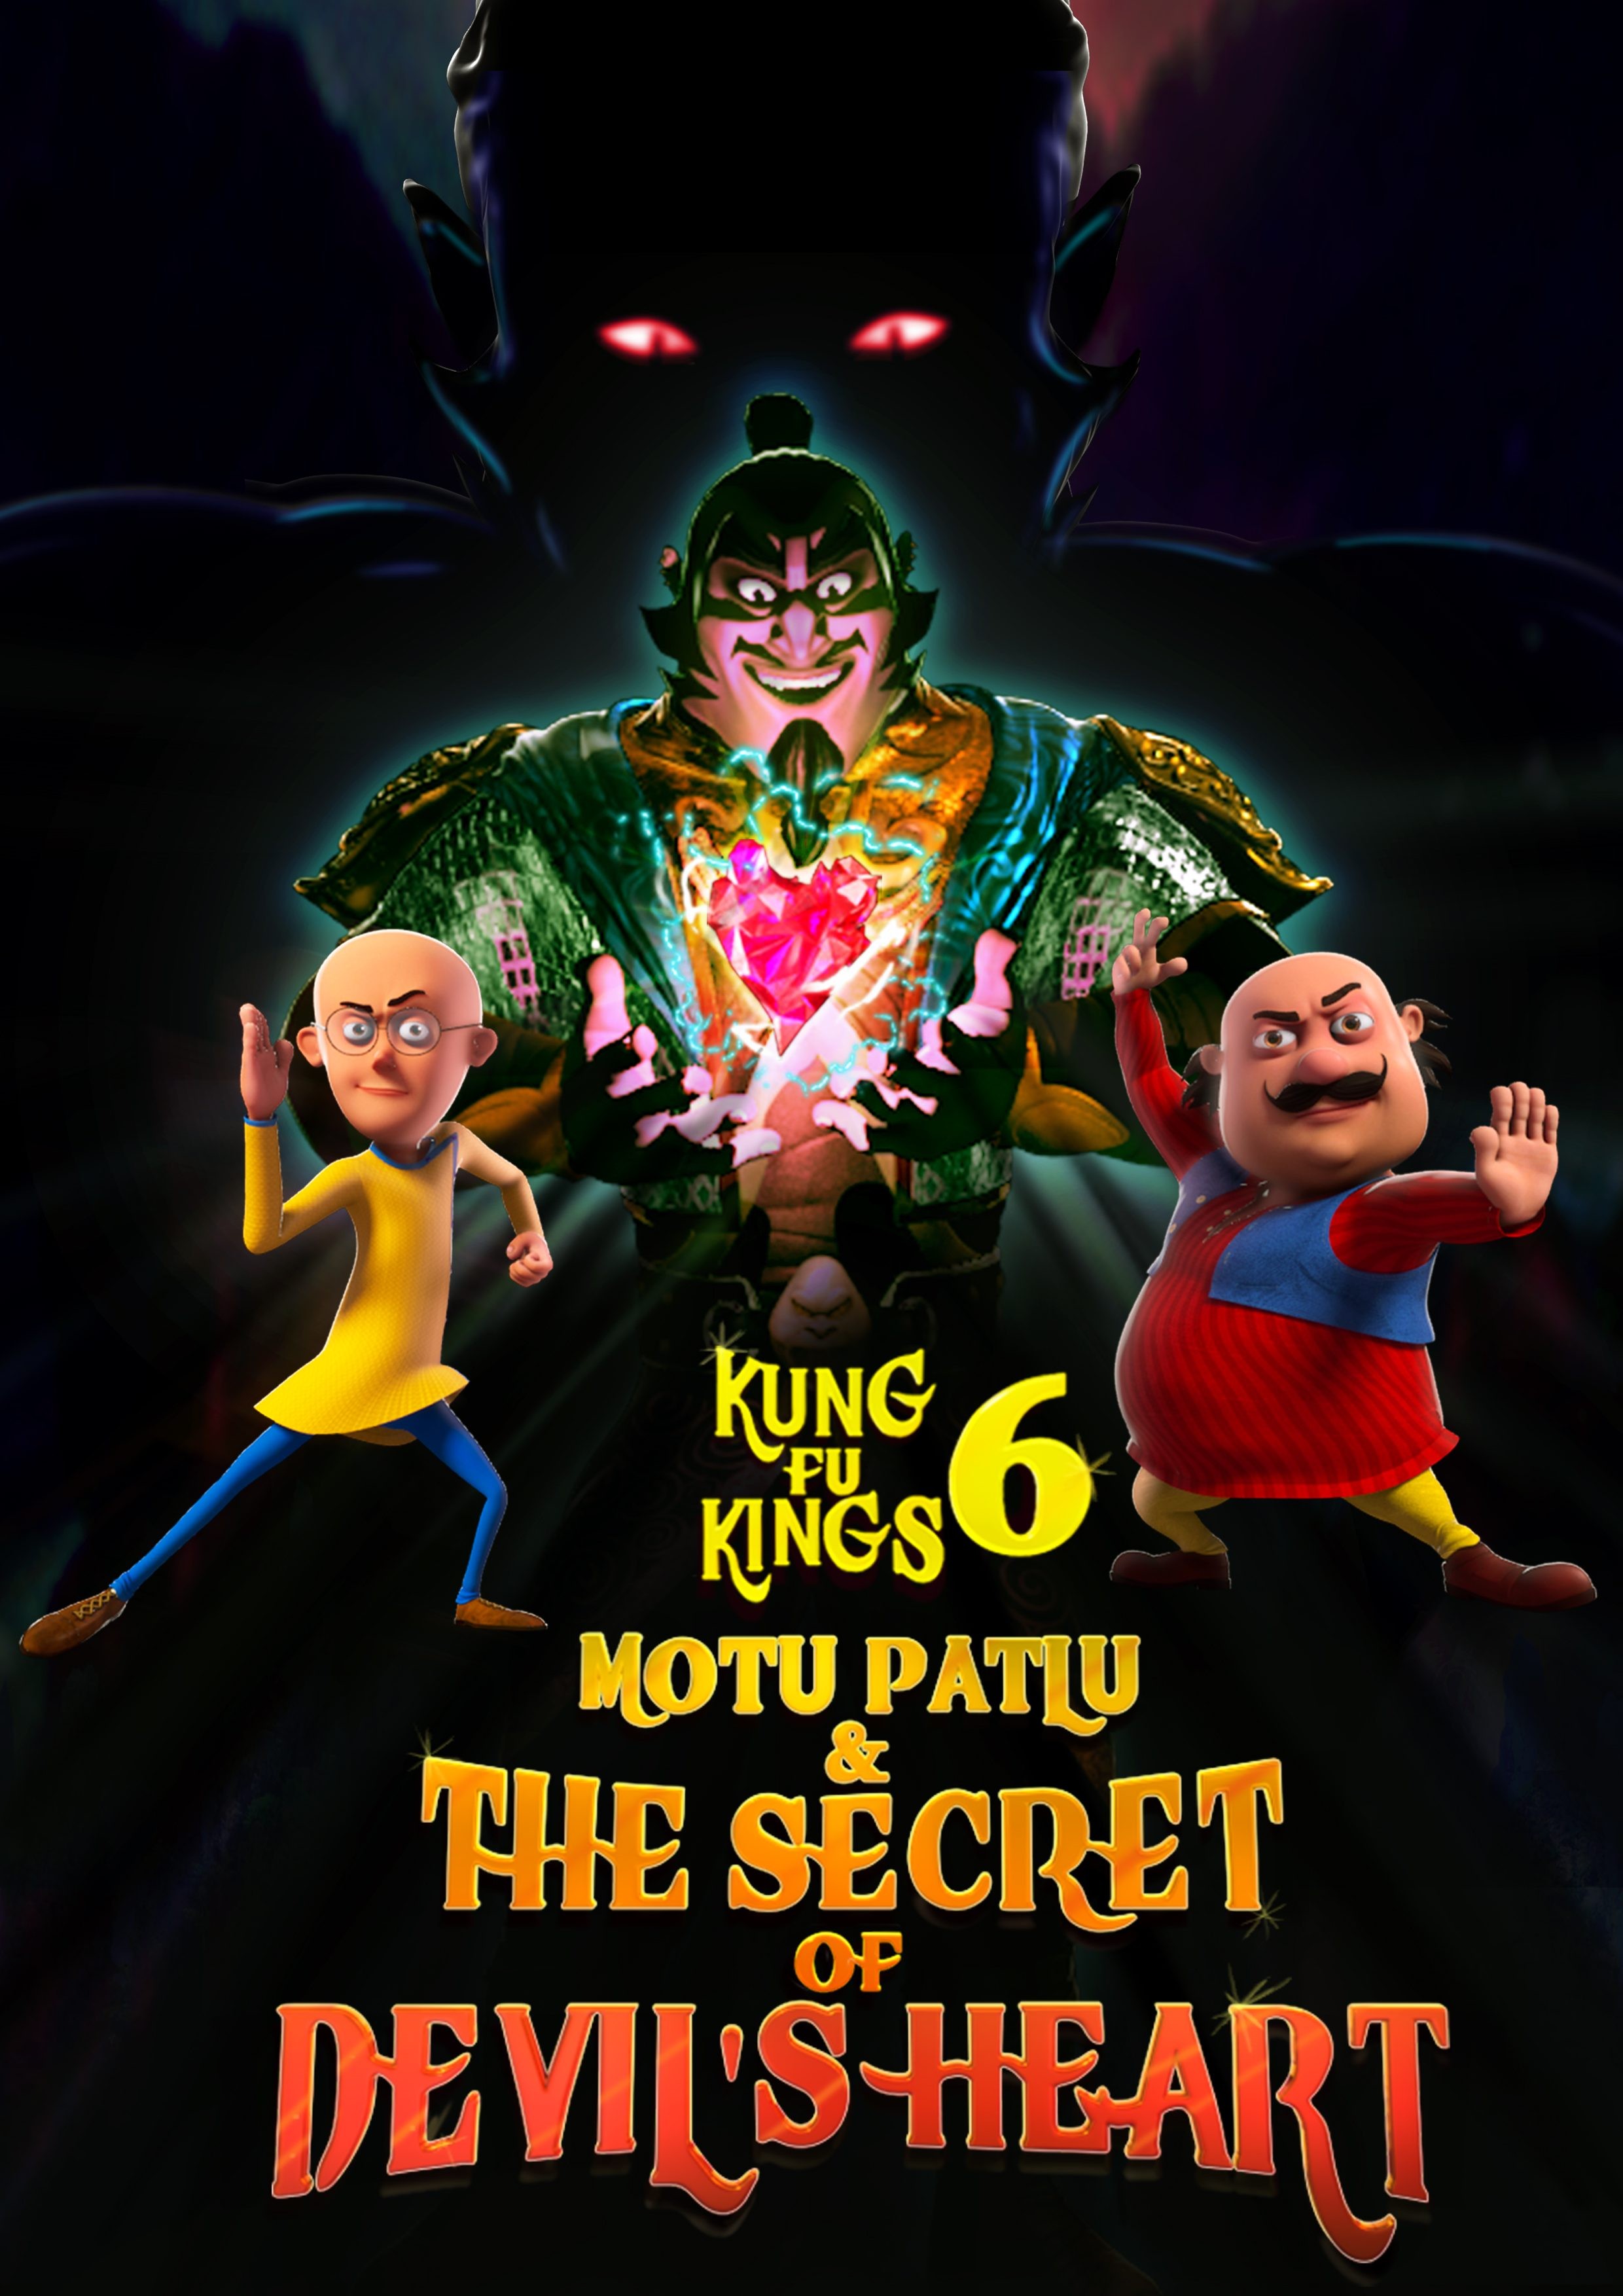 Motu Patlu and the Secret of Devils Heart 2022 Multi Audio Hindi ORG 480p HDRip 400MB Download